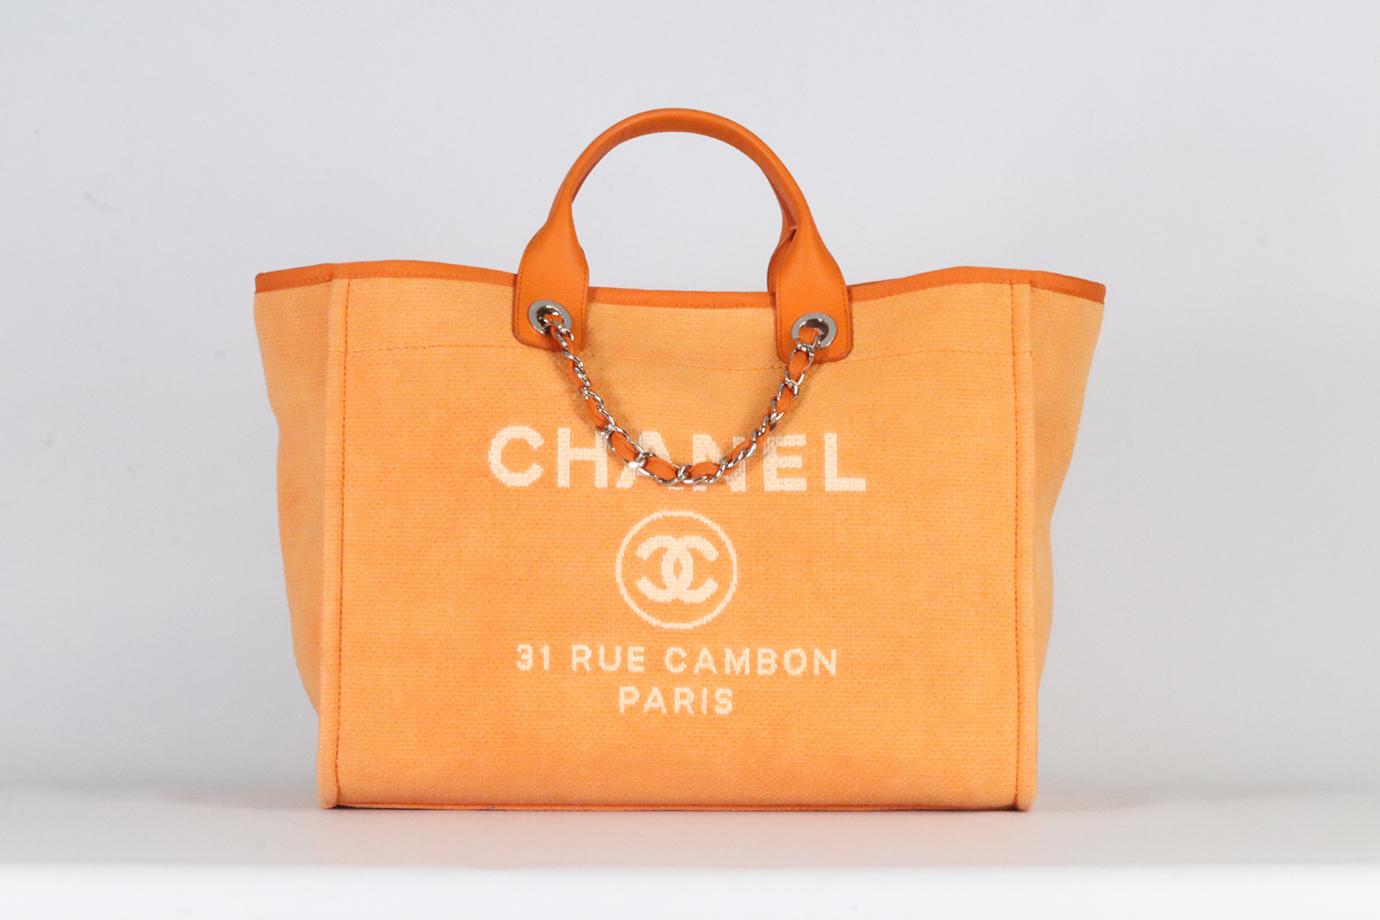 <ul>
<li>Chanel 2015 Deauville Medium Canvas And Leather Tote Bag.</li>
<li>Orange.</li>
<li>Magnetic fastening - Top.</li>
<li>Comes with Authenticity Card.</li>
<li>Does not come with - dustbag or box.</li>
<li><strong>Model: